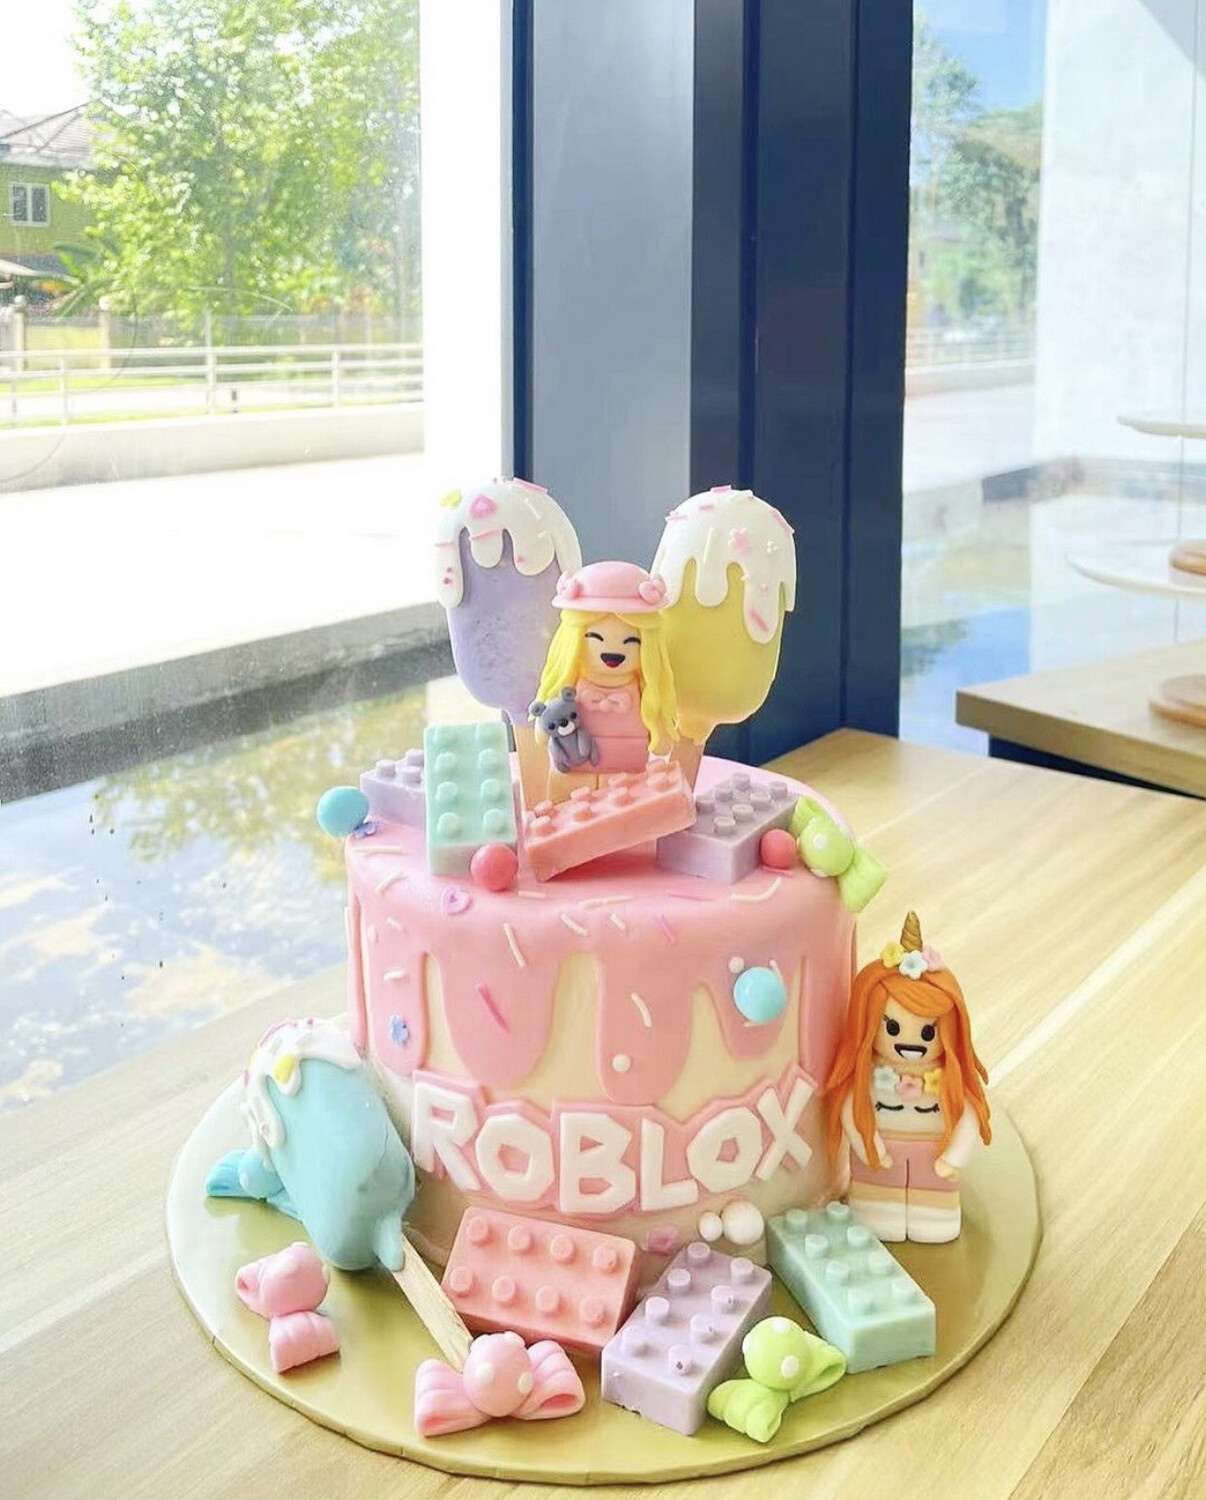 Roblox Girl Cake 2